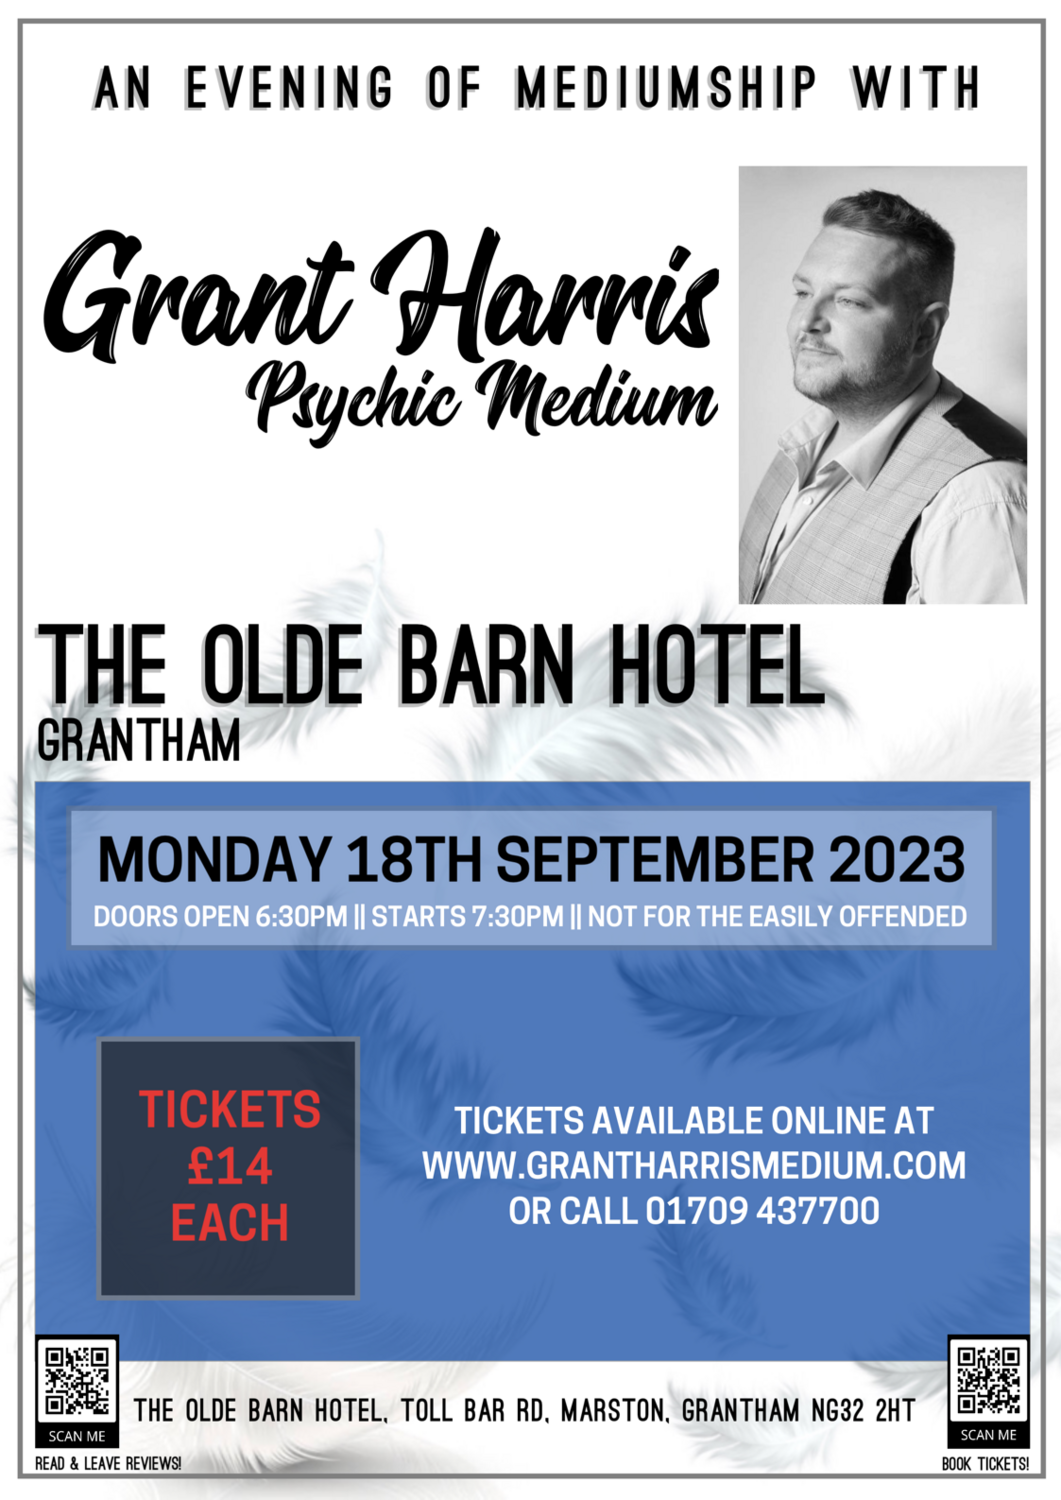 The Olde Barn Hotel, Grantham, Monday 18th September 2023